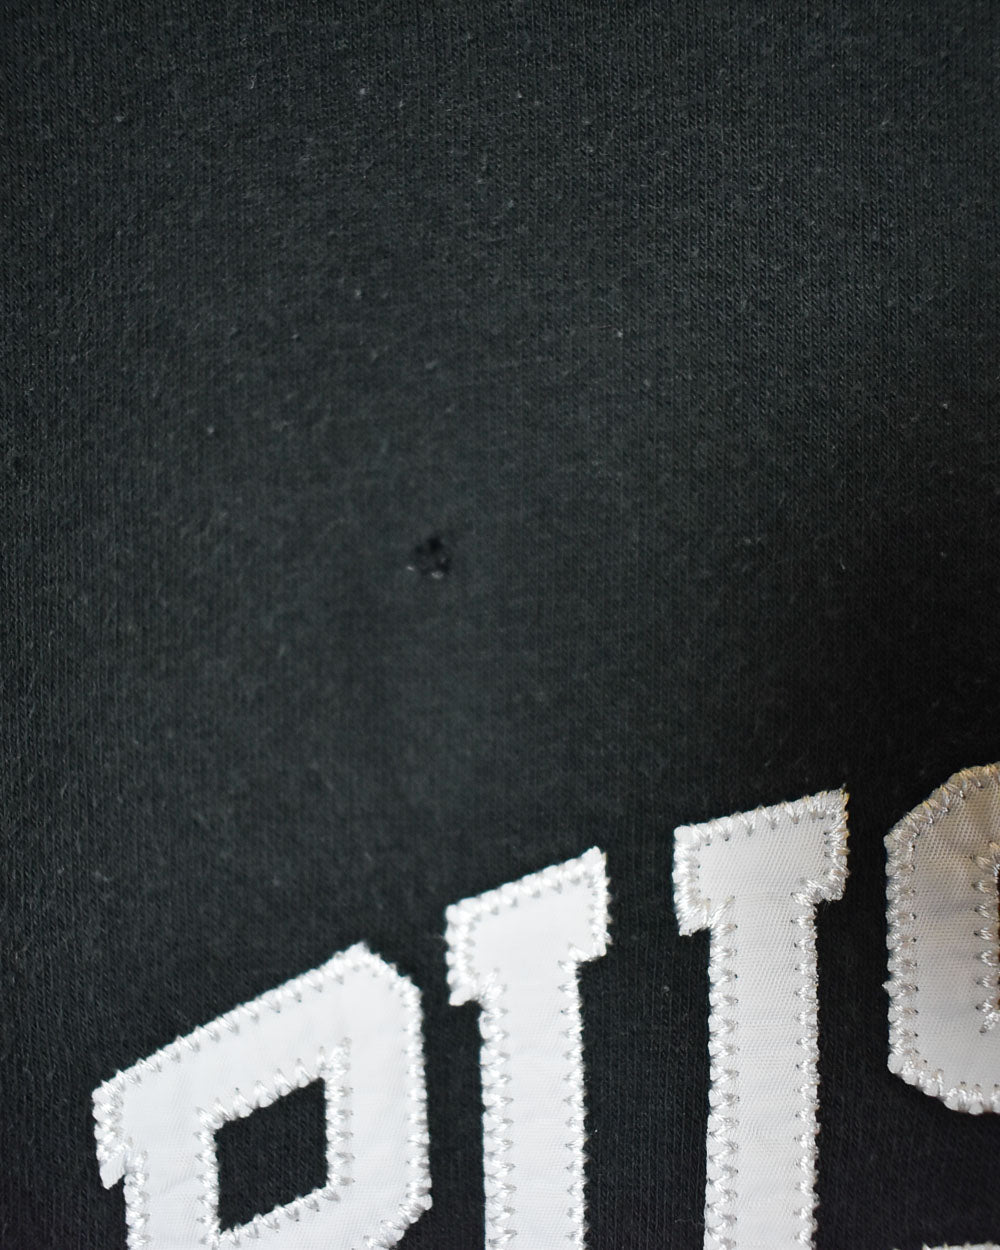 Black Russel Athletic Sweatshirt - Large